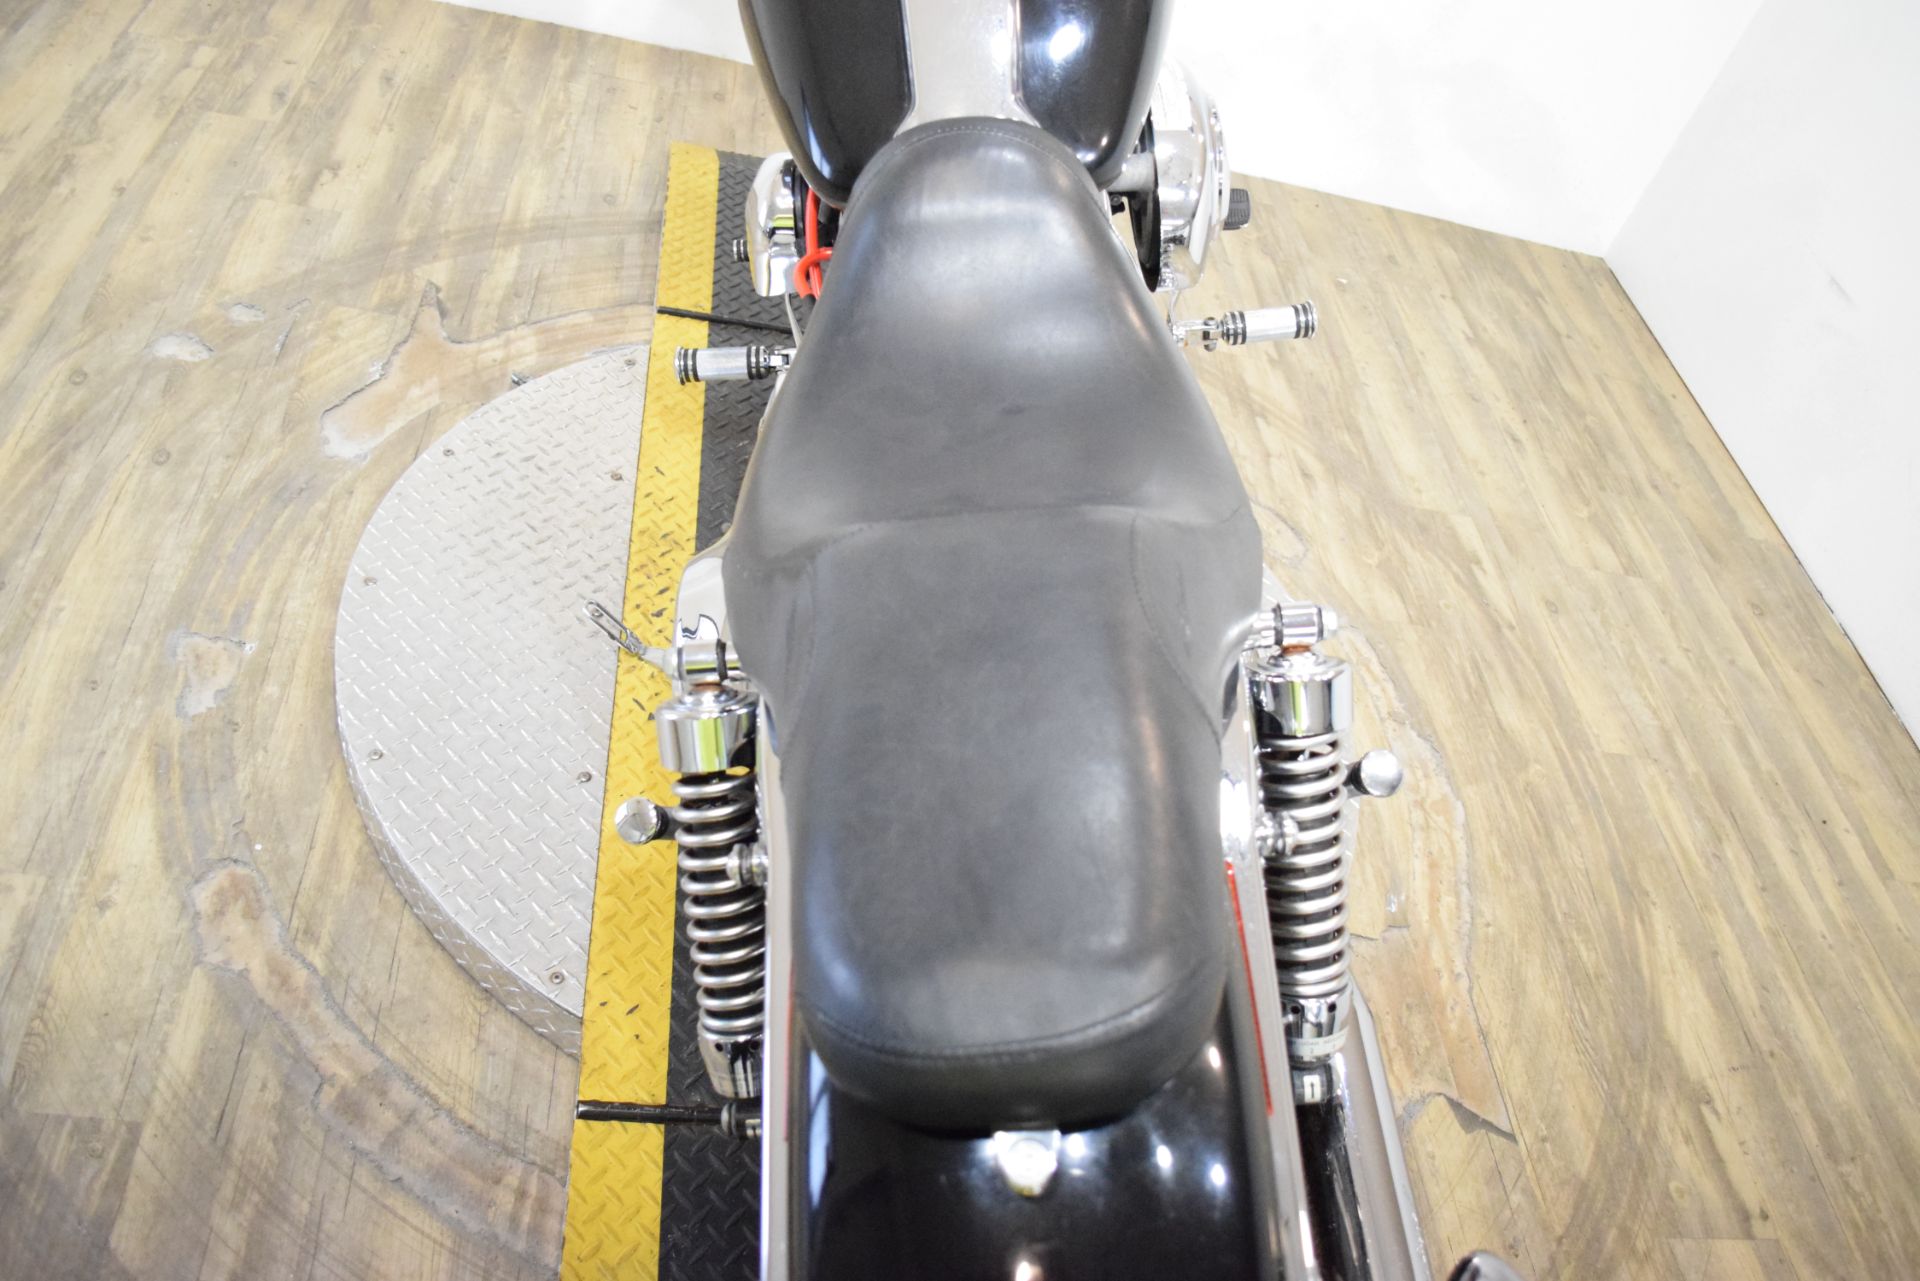 2006 Harley-Davidson Dyna™ Super Glide® in Wauconda, Illinois - Photo 26